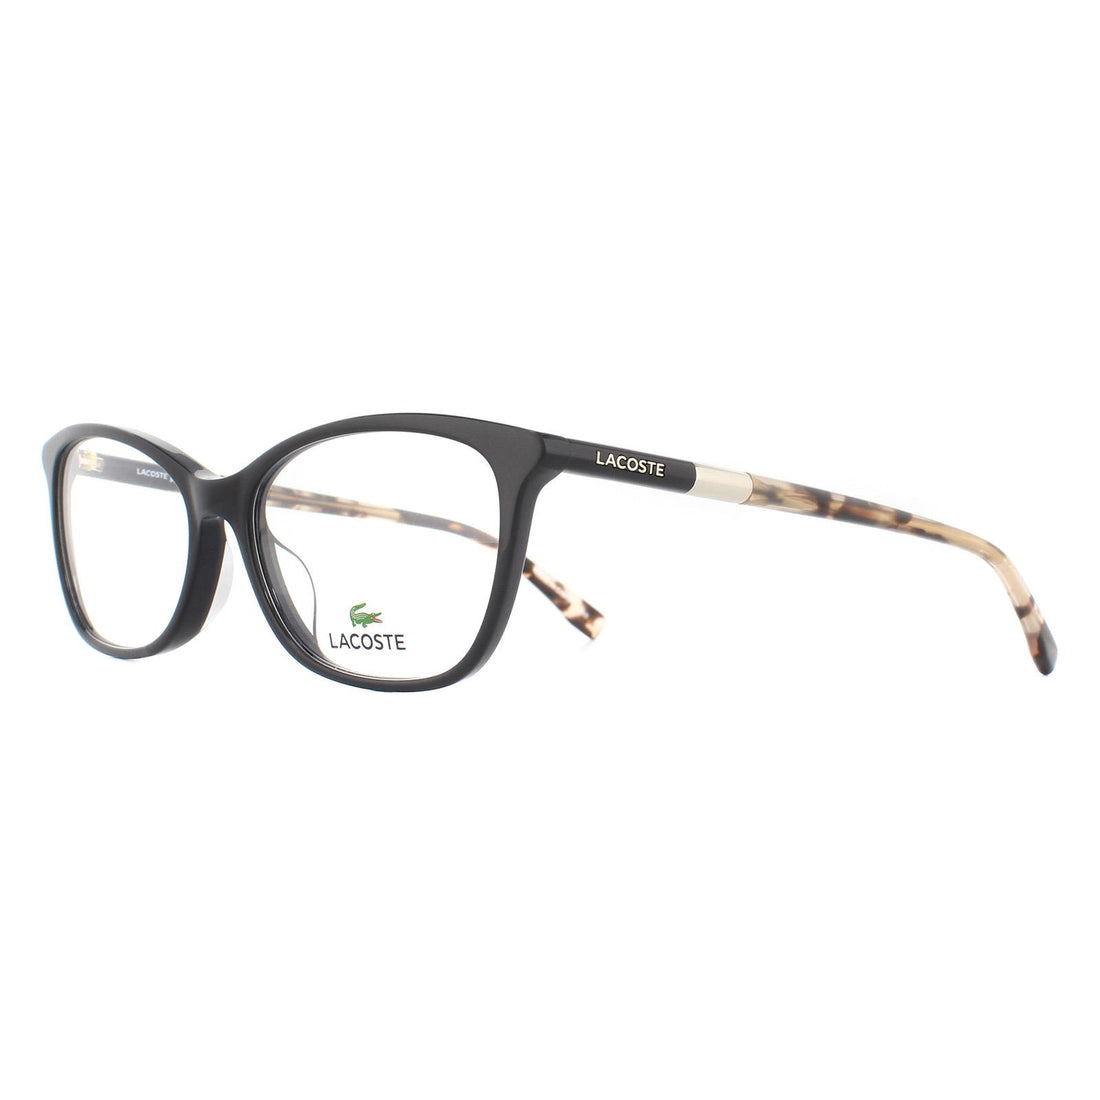 Lacoste L2791 Glasses Frames